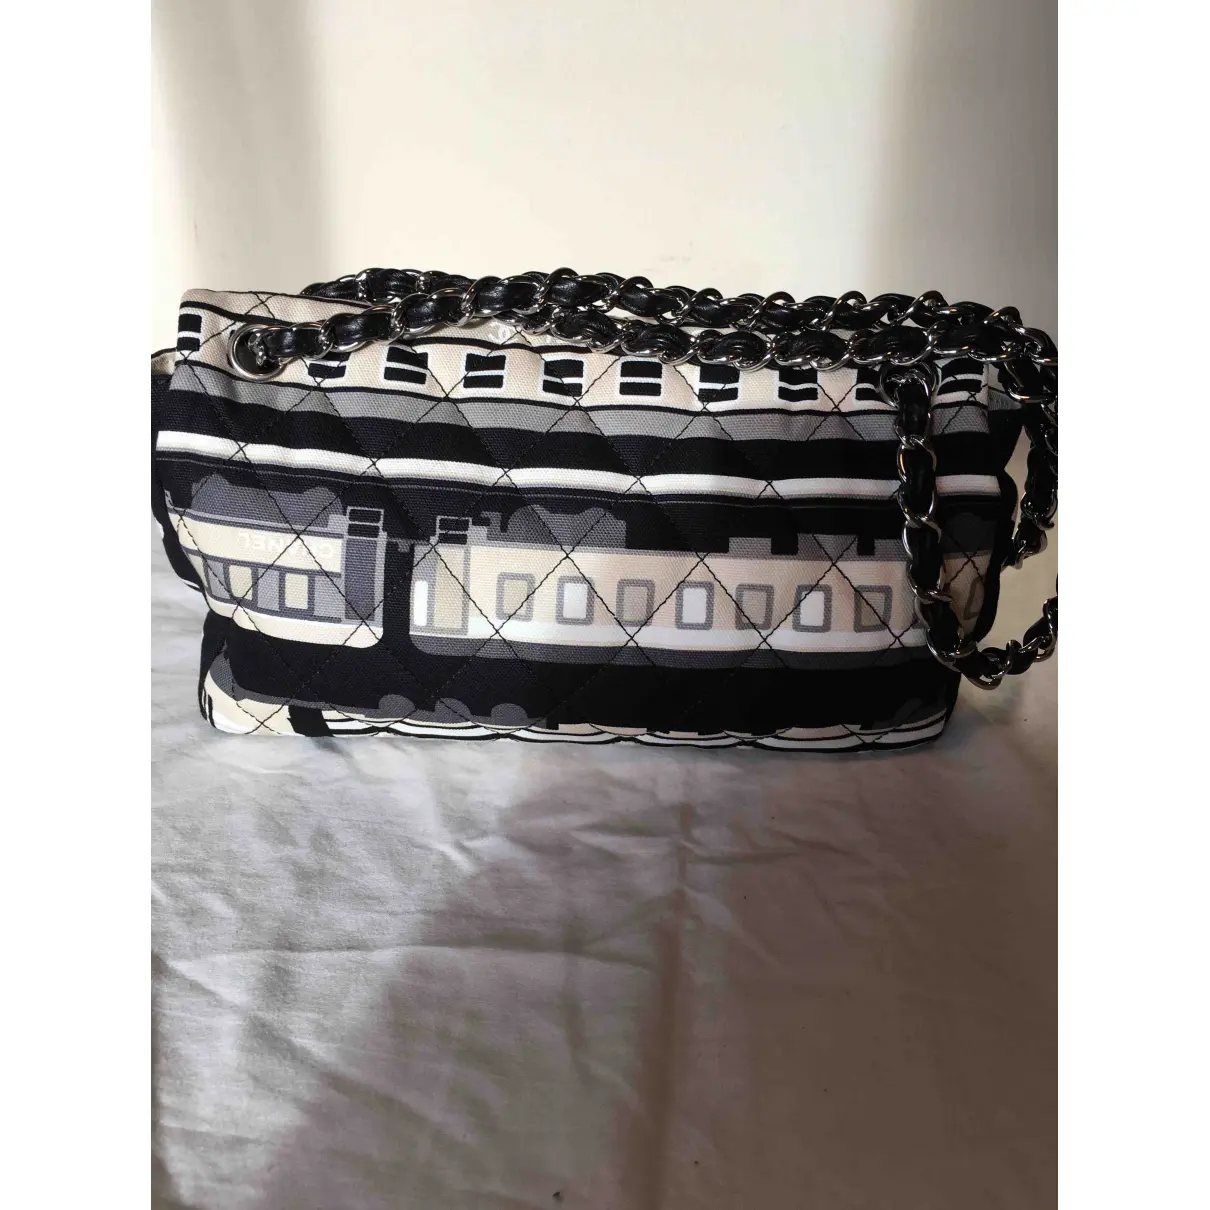 Buy Chanel Timeless/Classique cloth handbag online